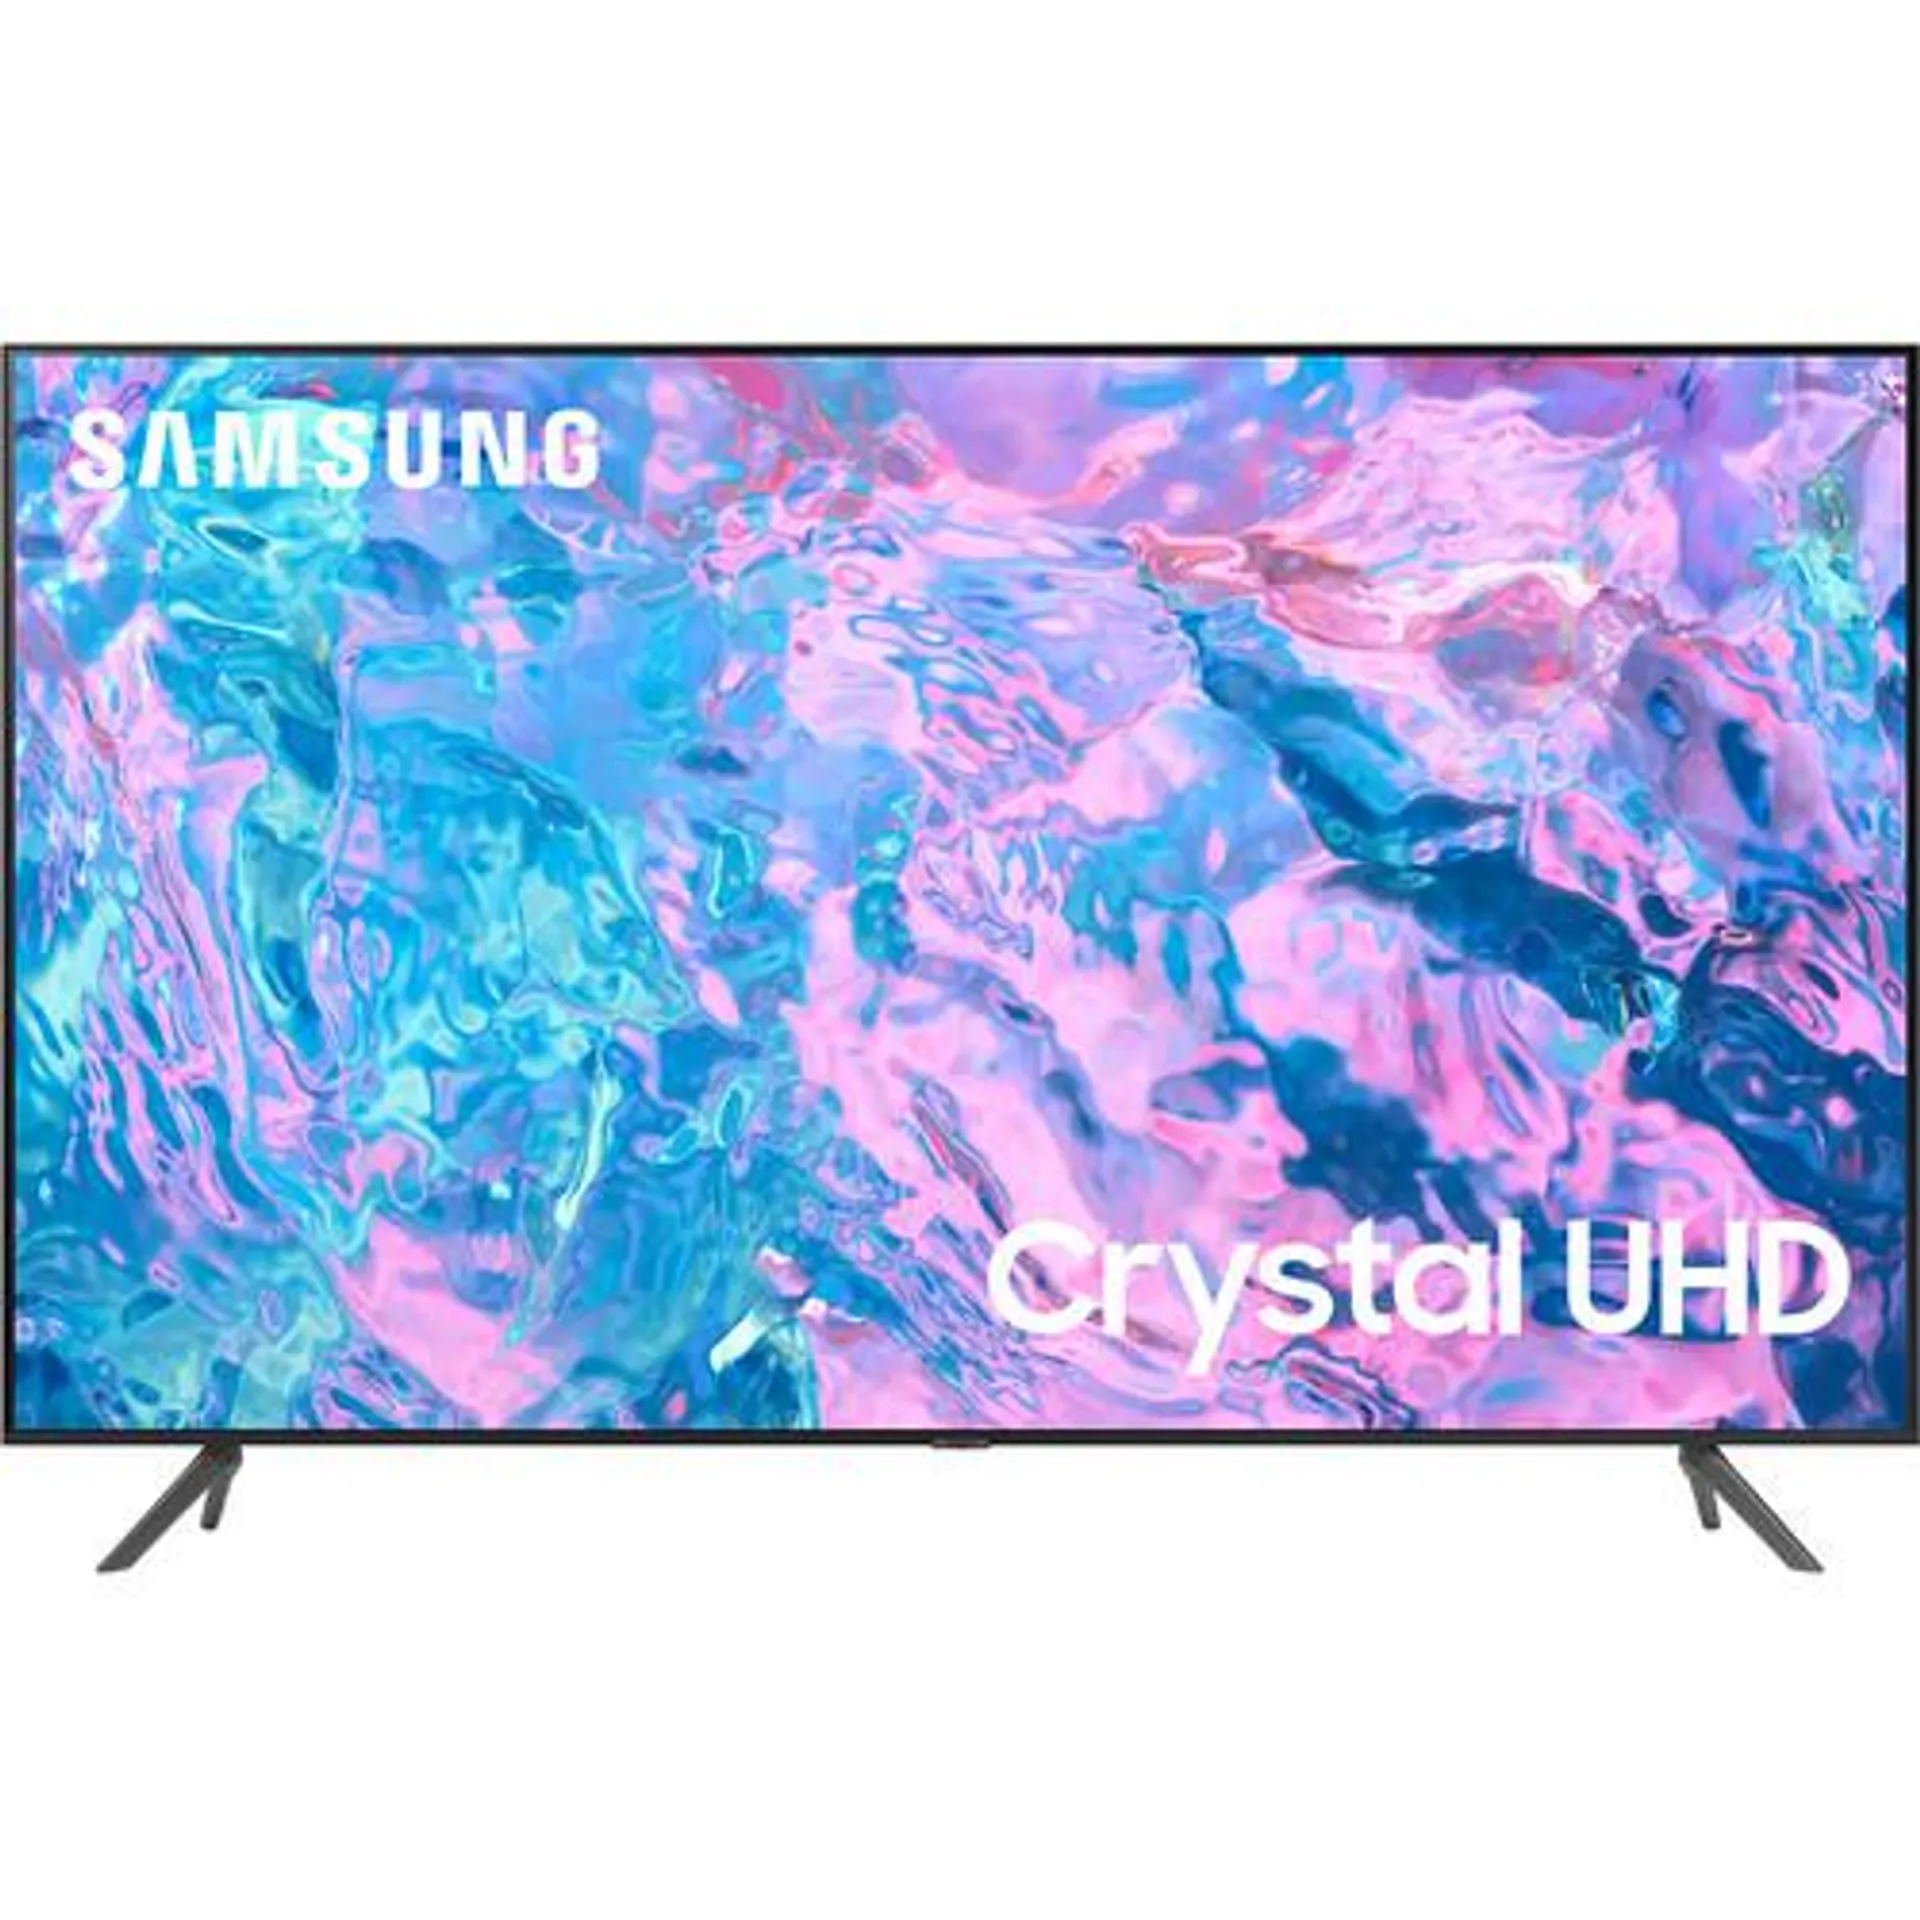 Samsung CU7000 Crystal UHD 75" 4K HDR Smart LED TV